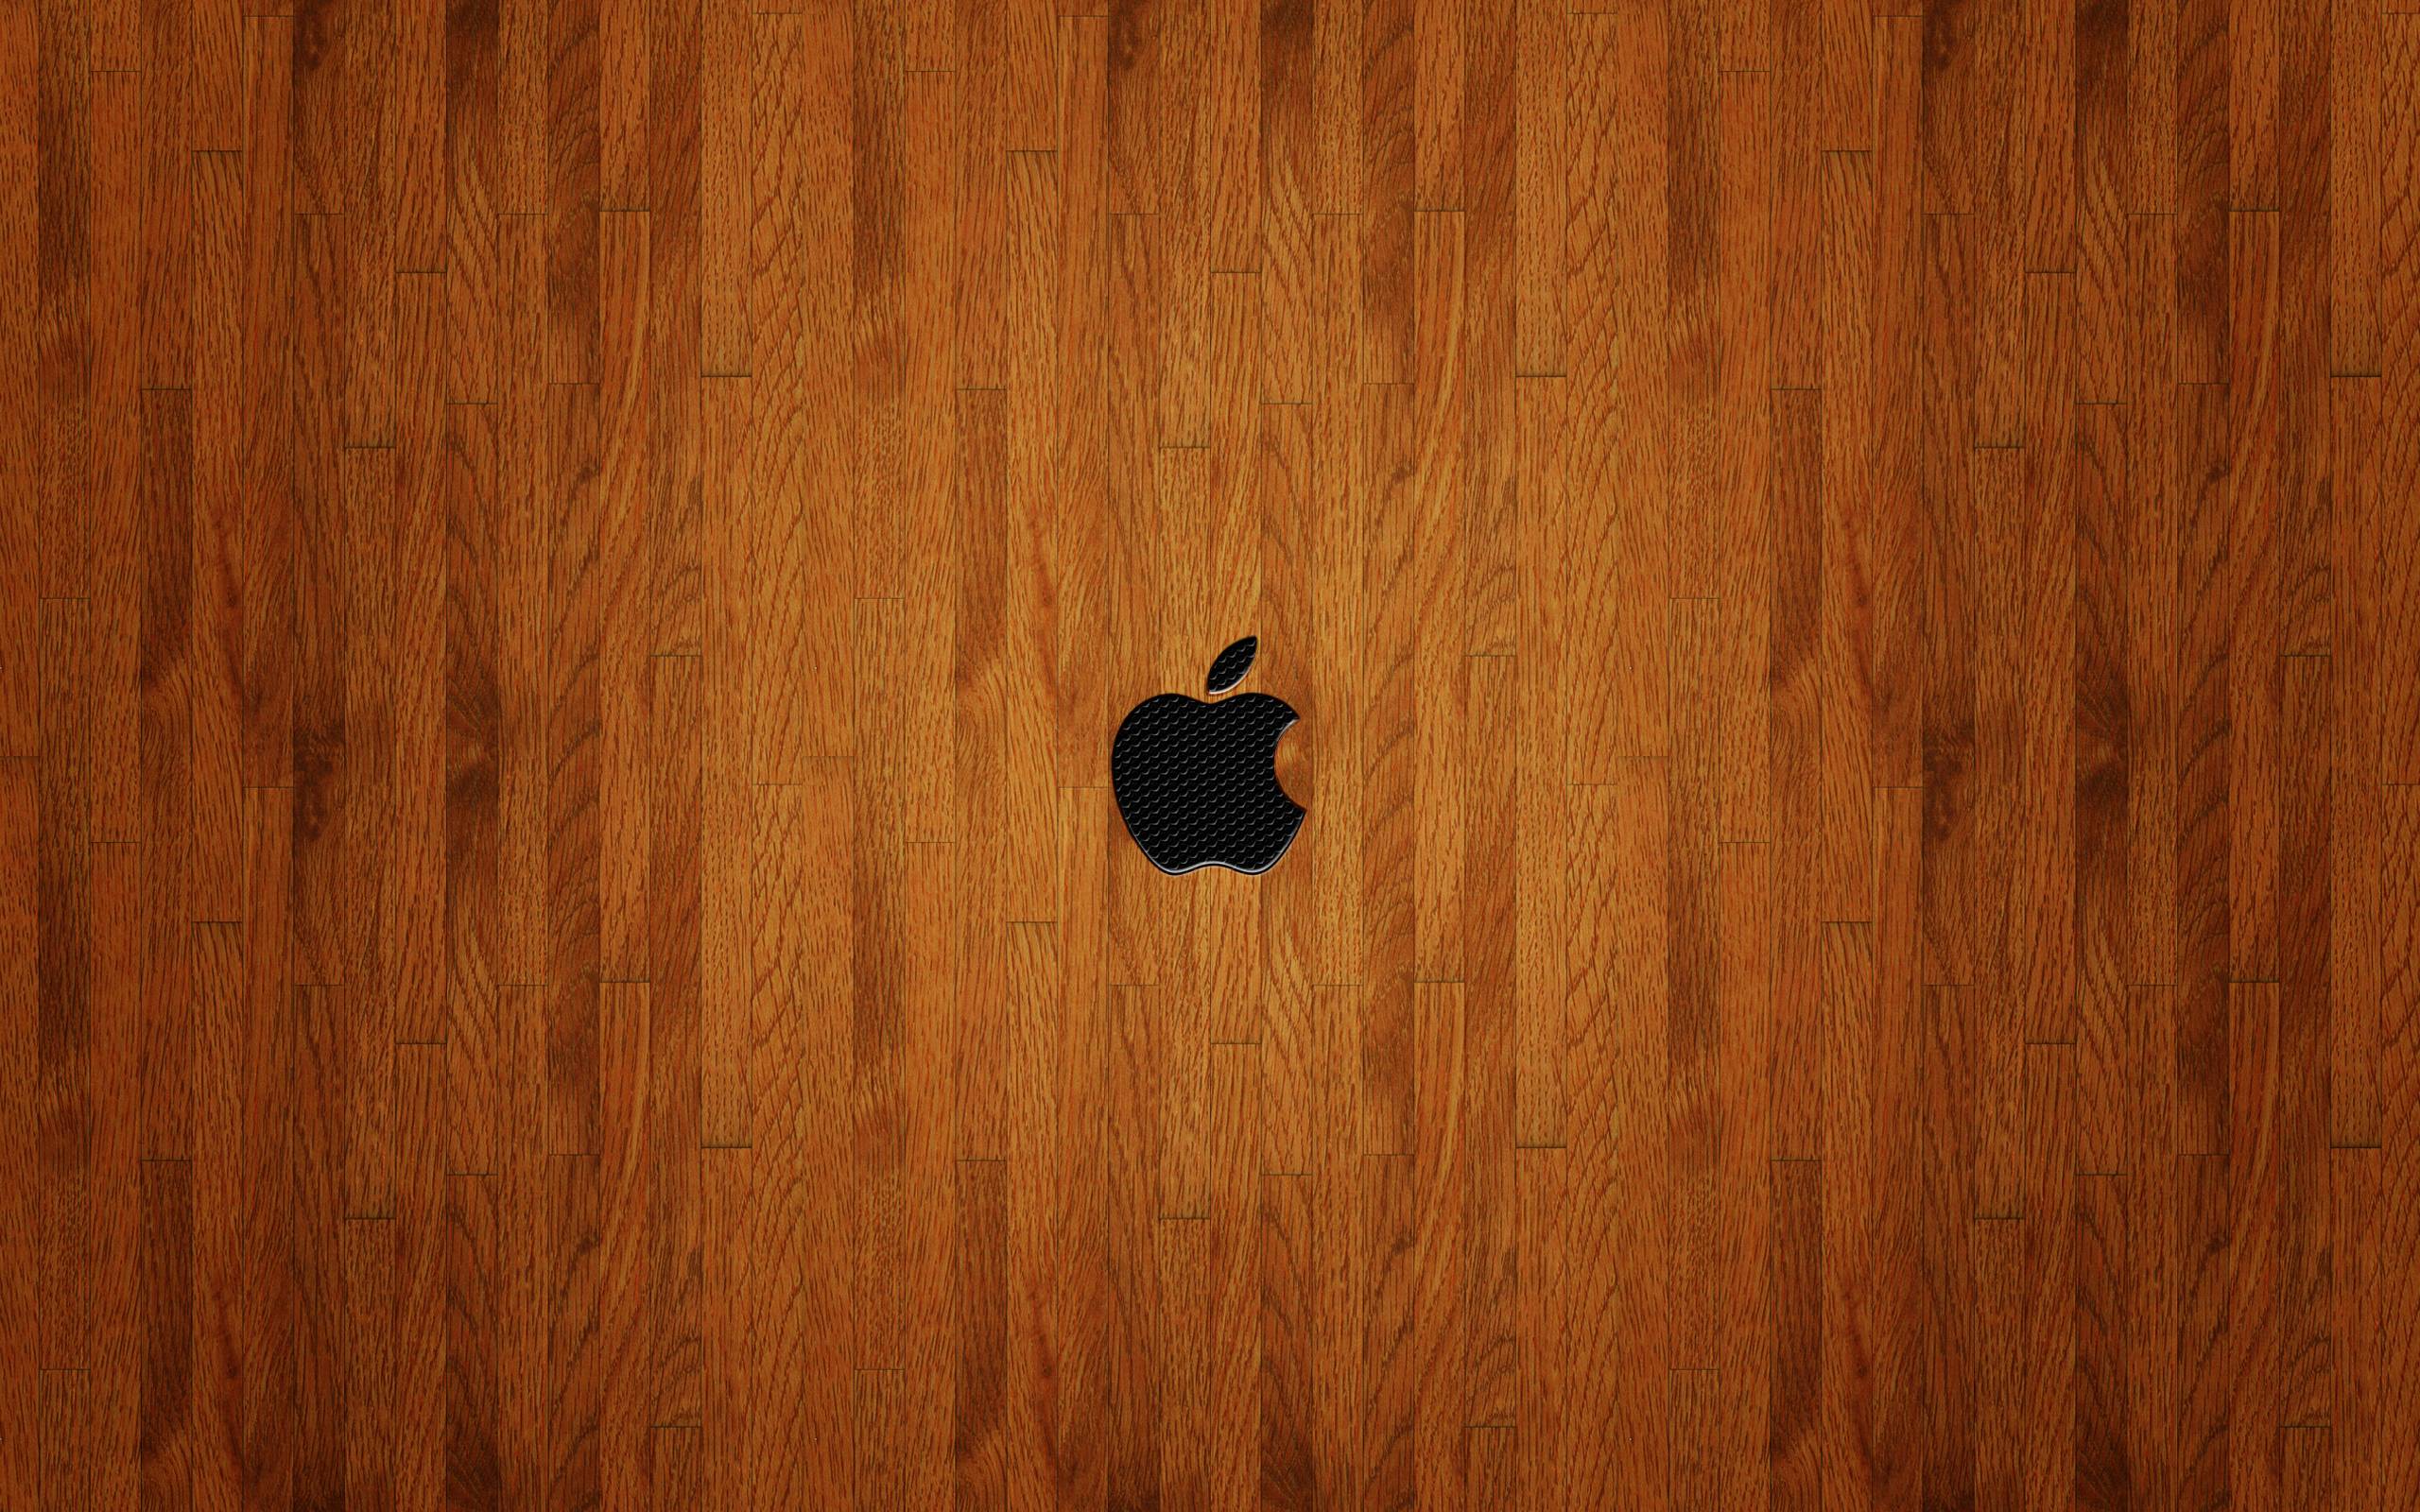 Apple Mac OSX Wooden Effect HD Wallpaper Wallpaper Free